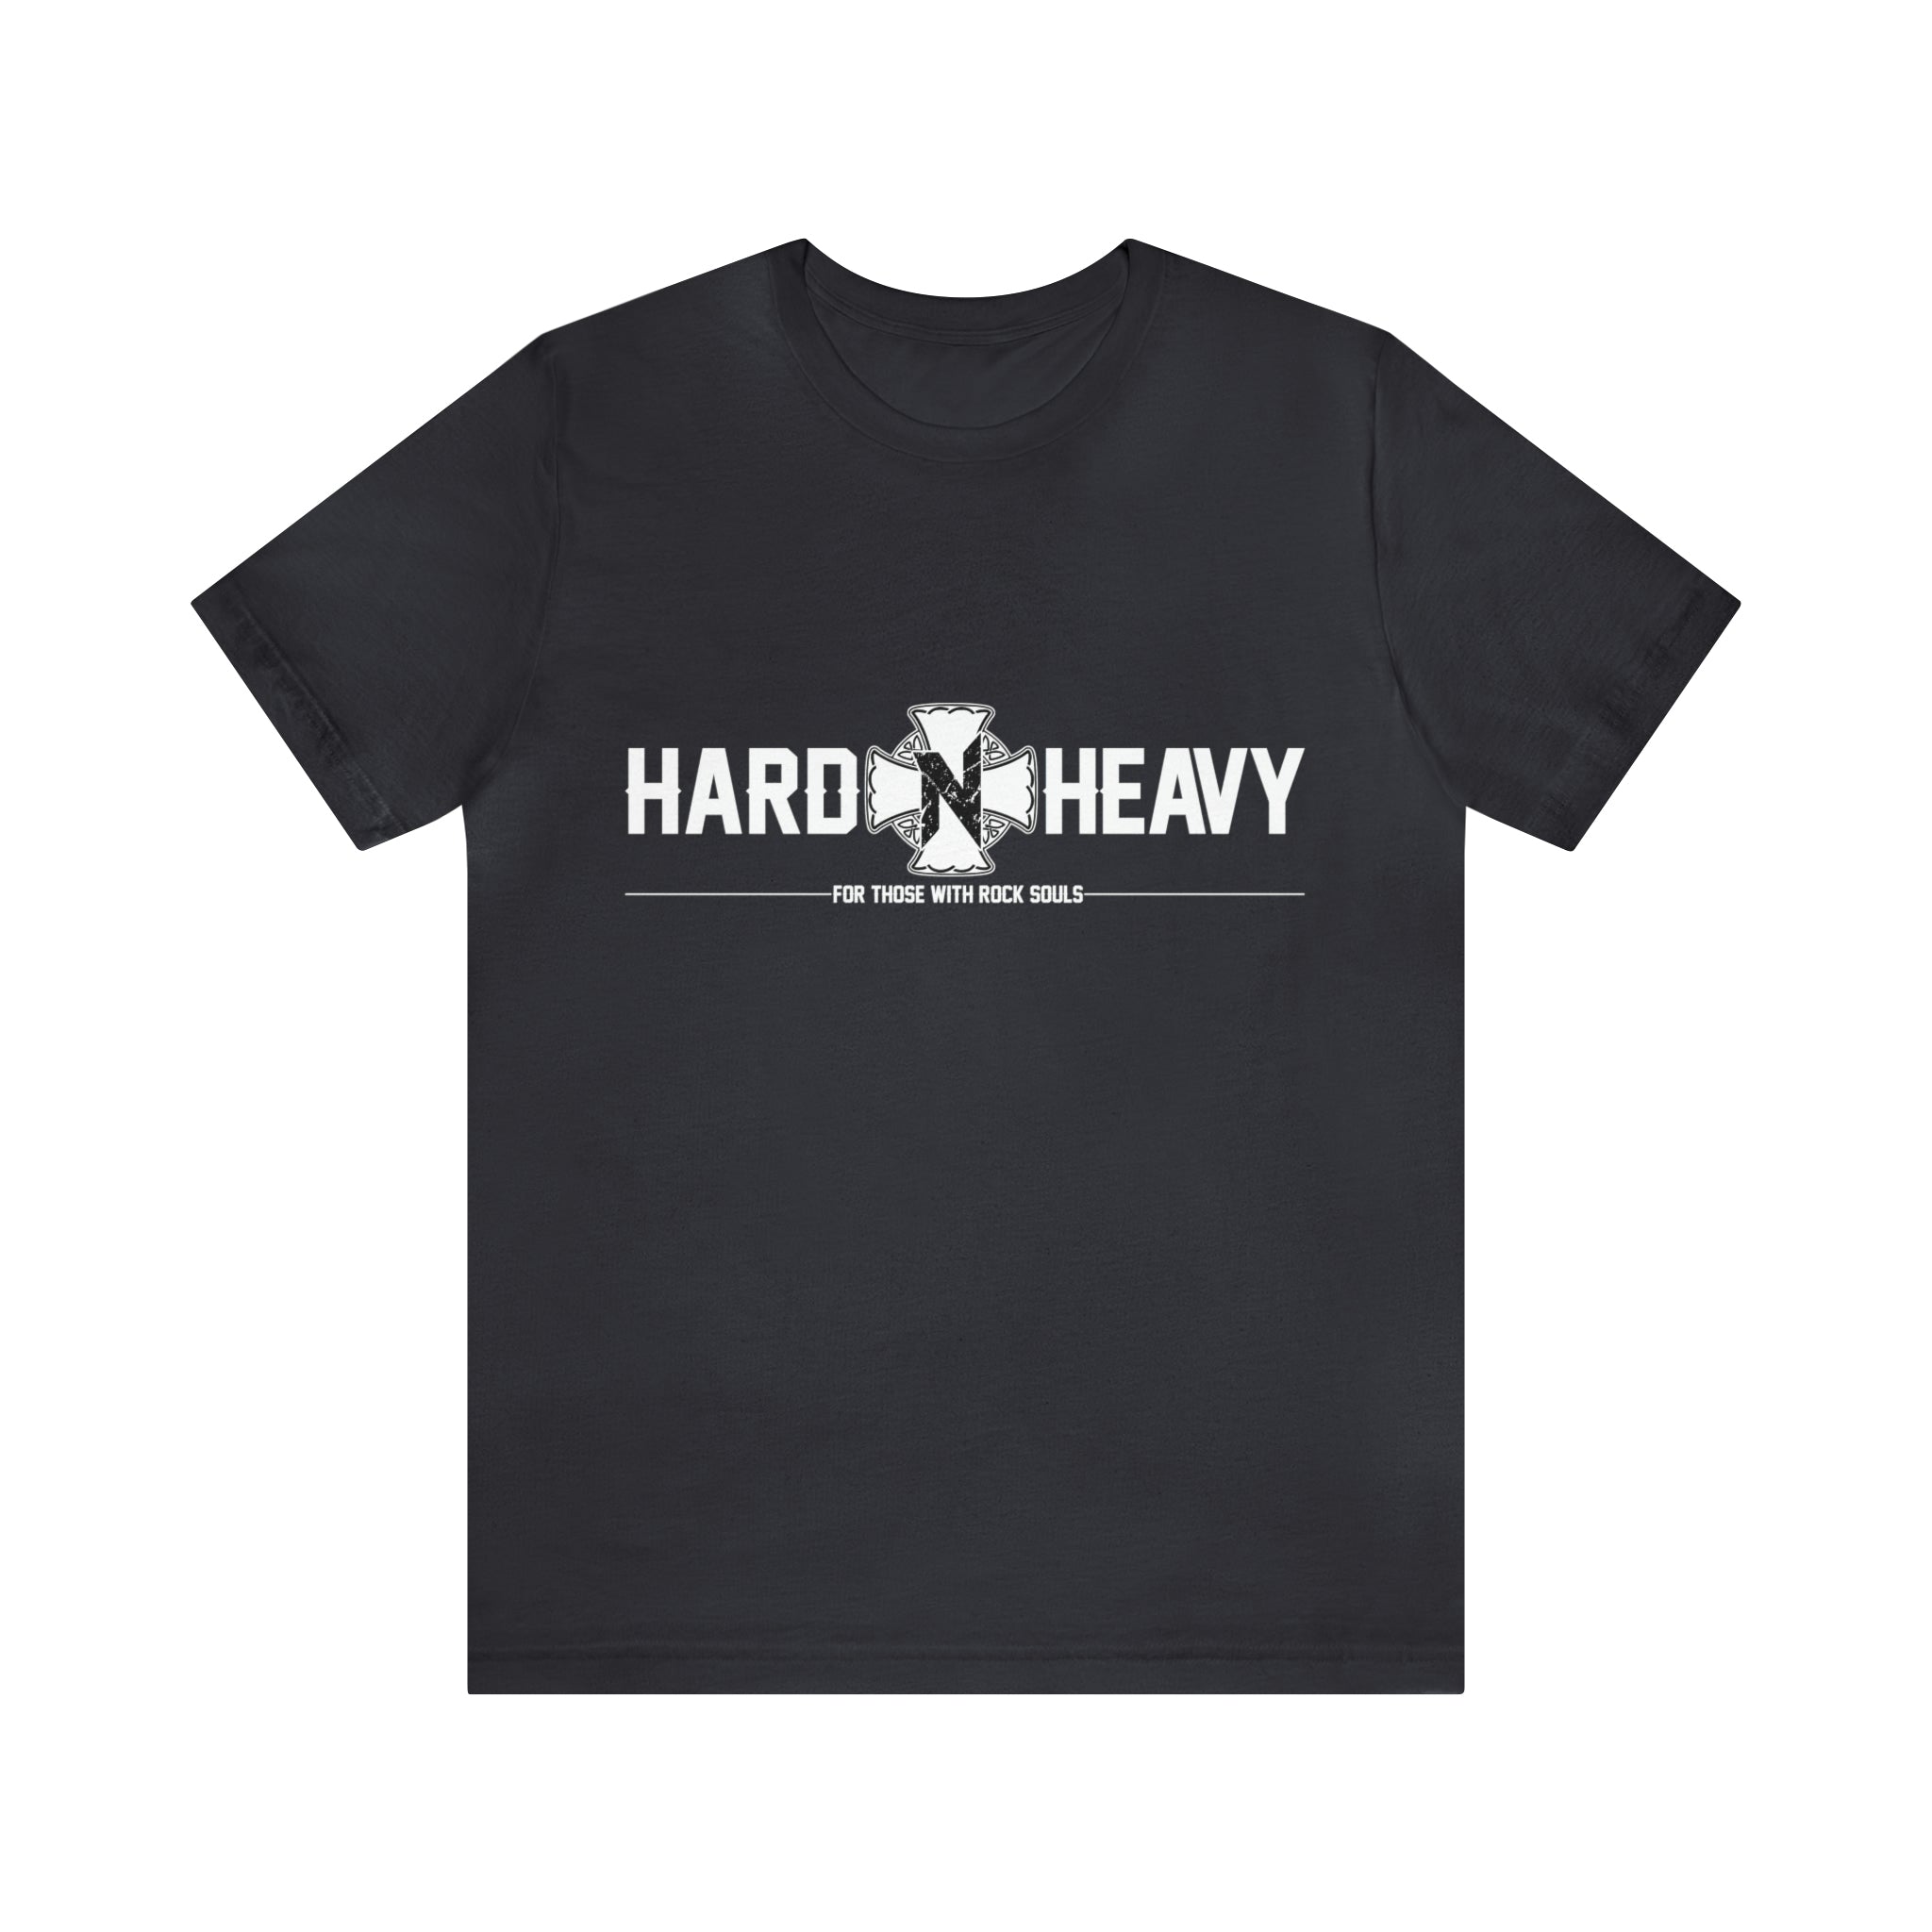 HARD'N'HEAVY Short Sleeve Tee for Women / Alternative Fashion Outfits - HARD'N'HEAVY